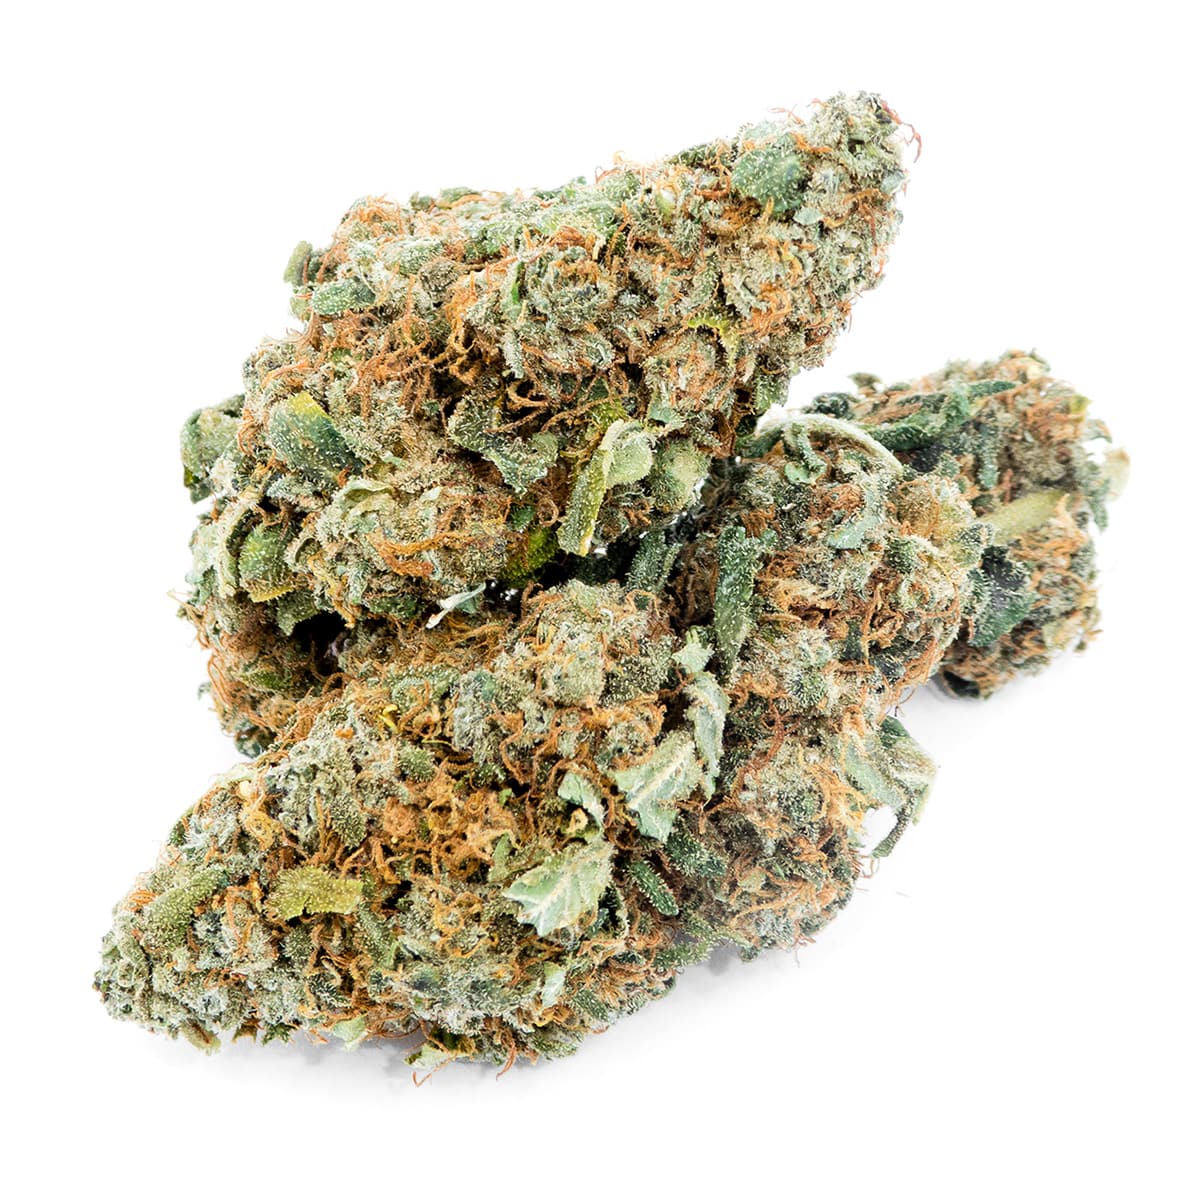 swiss-cbd-wholesale-legal-cannabis-light-indoor-premium-weed-europe-delivery-orange-bud-big.jpg